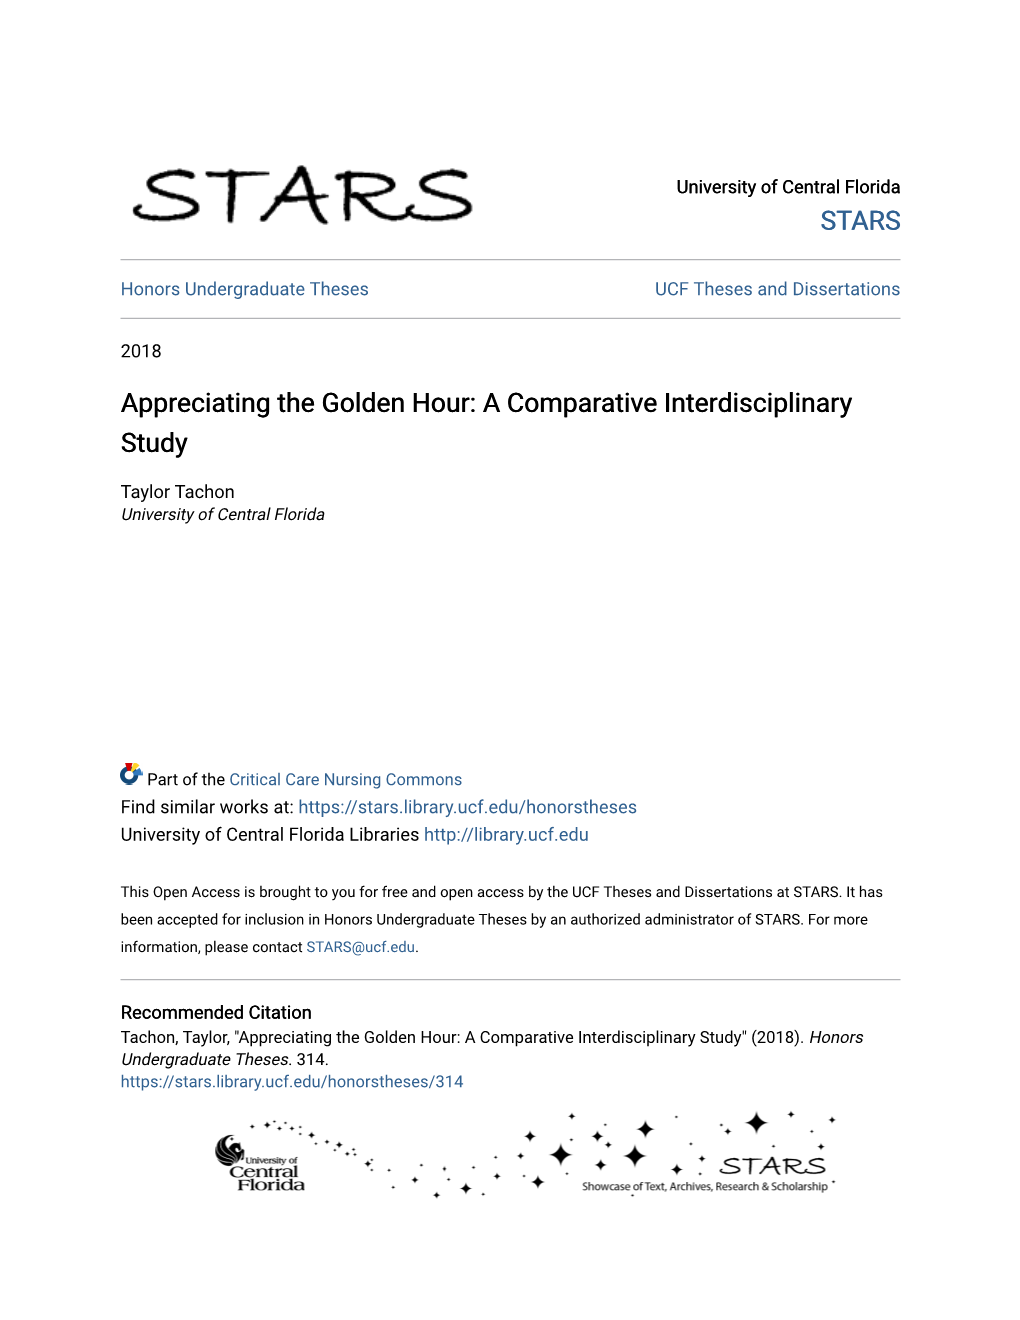 Appreciating the Golden Hour: a Comparative Interdisciplinary Study